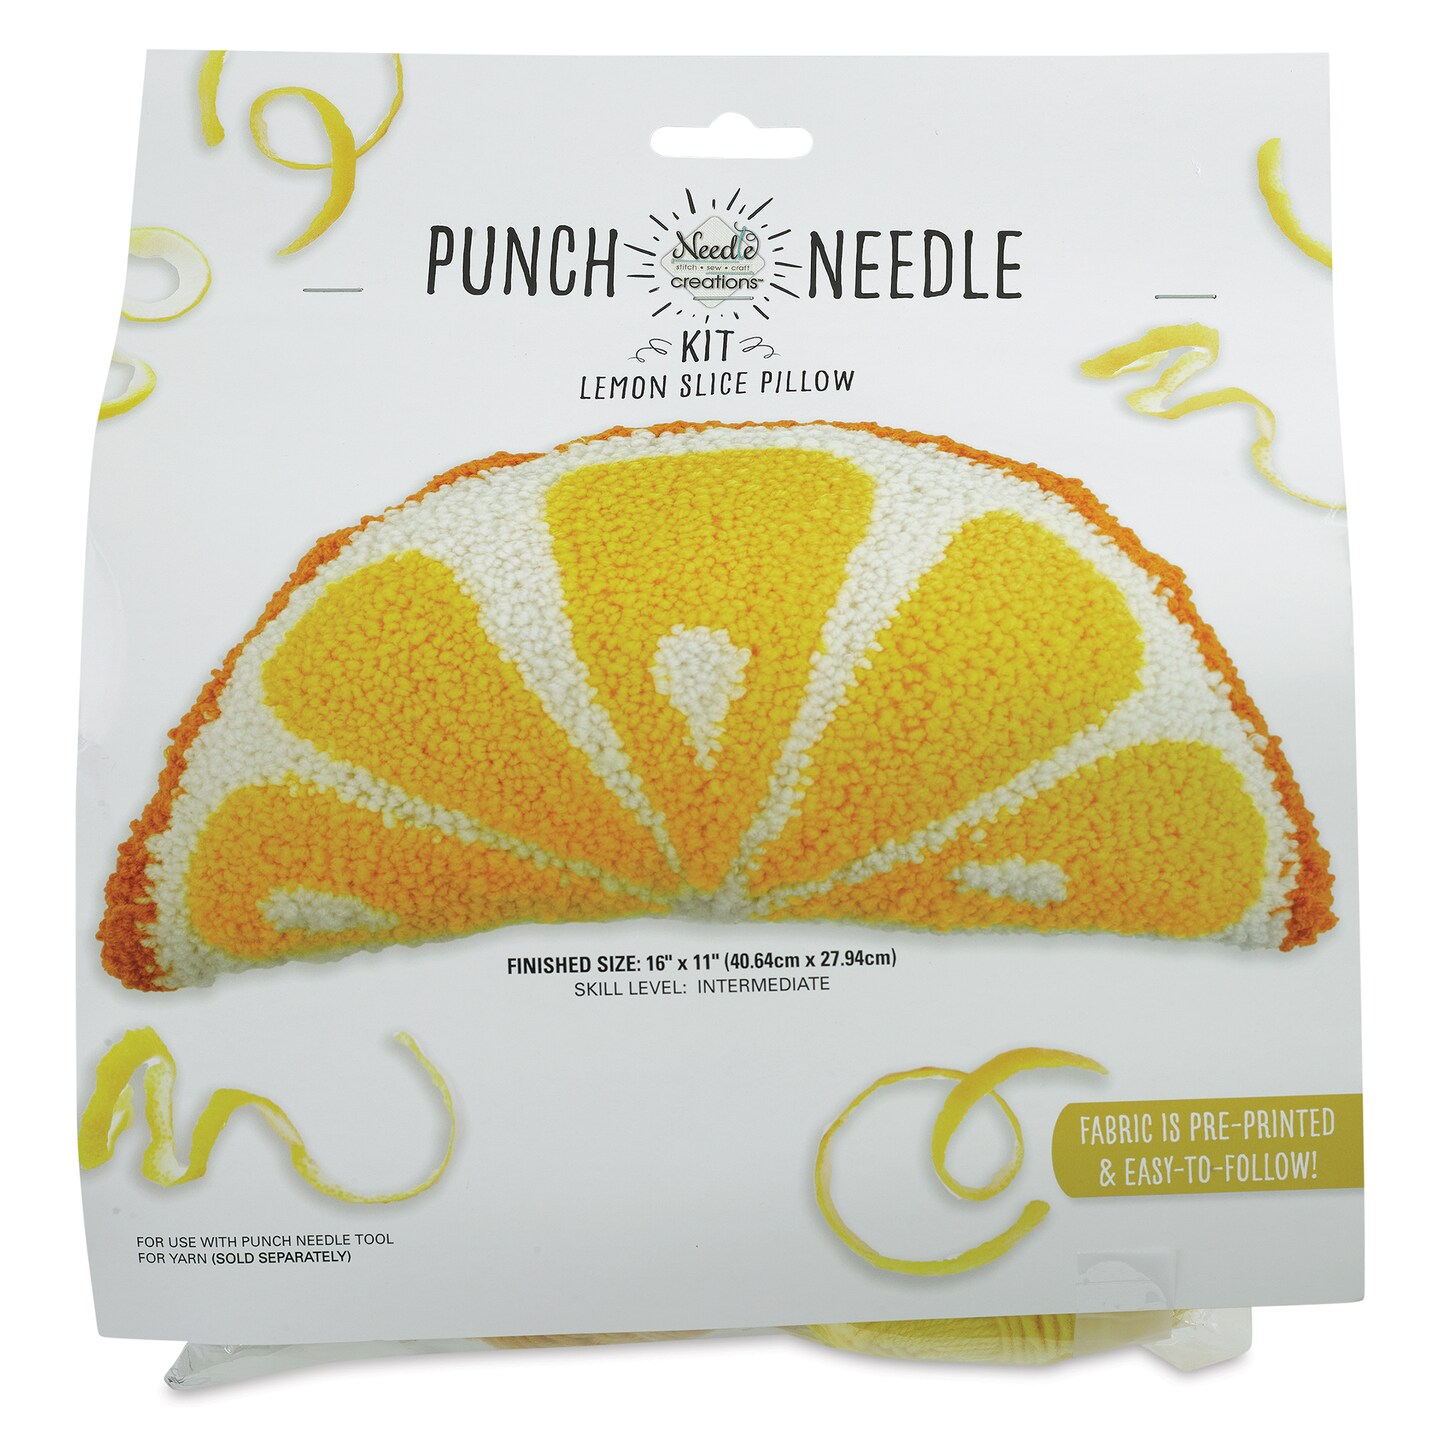 Needle Creations Punch Needle Pillow Kit - Lemon Slice